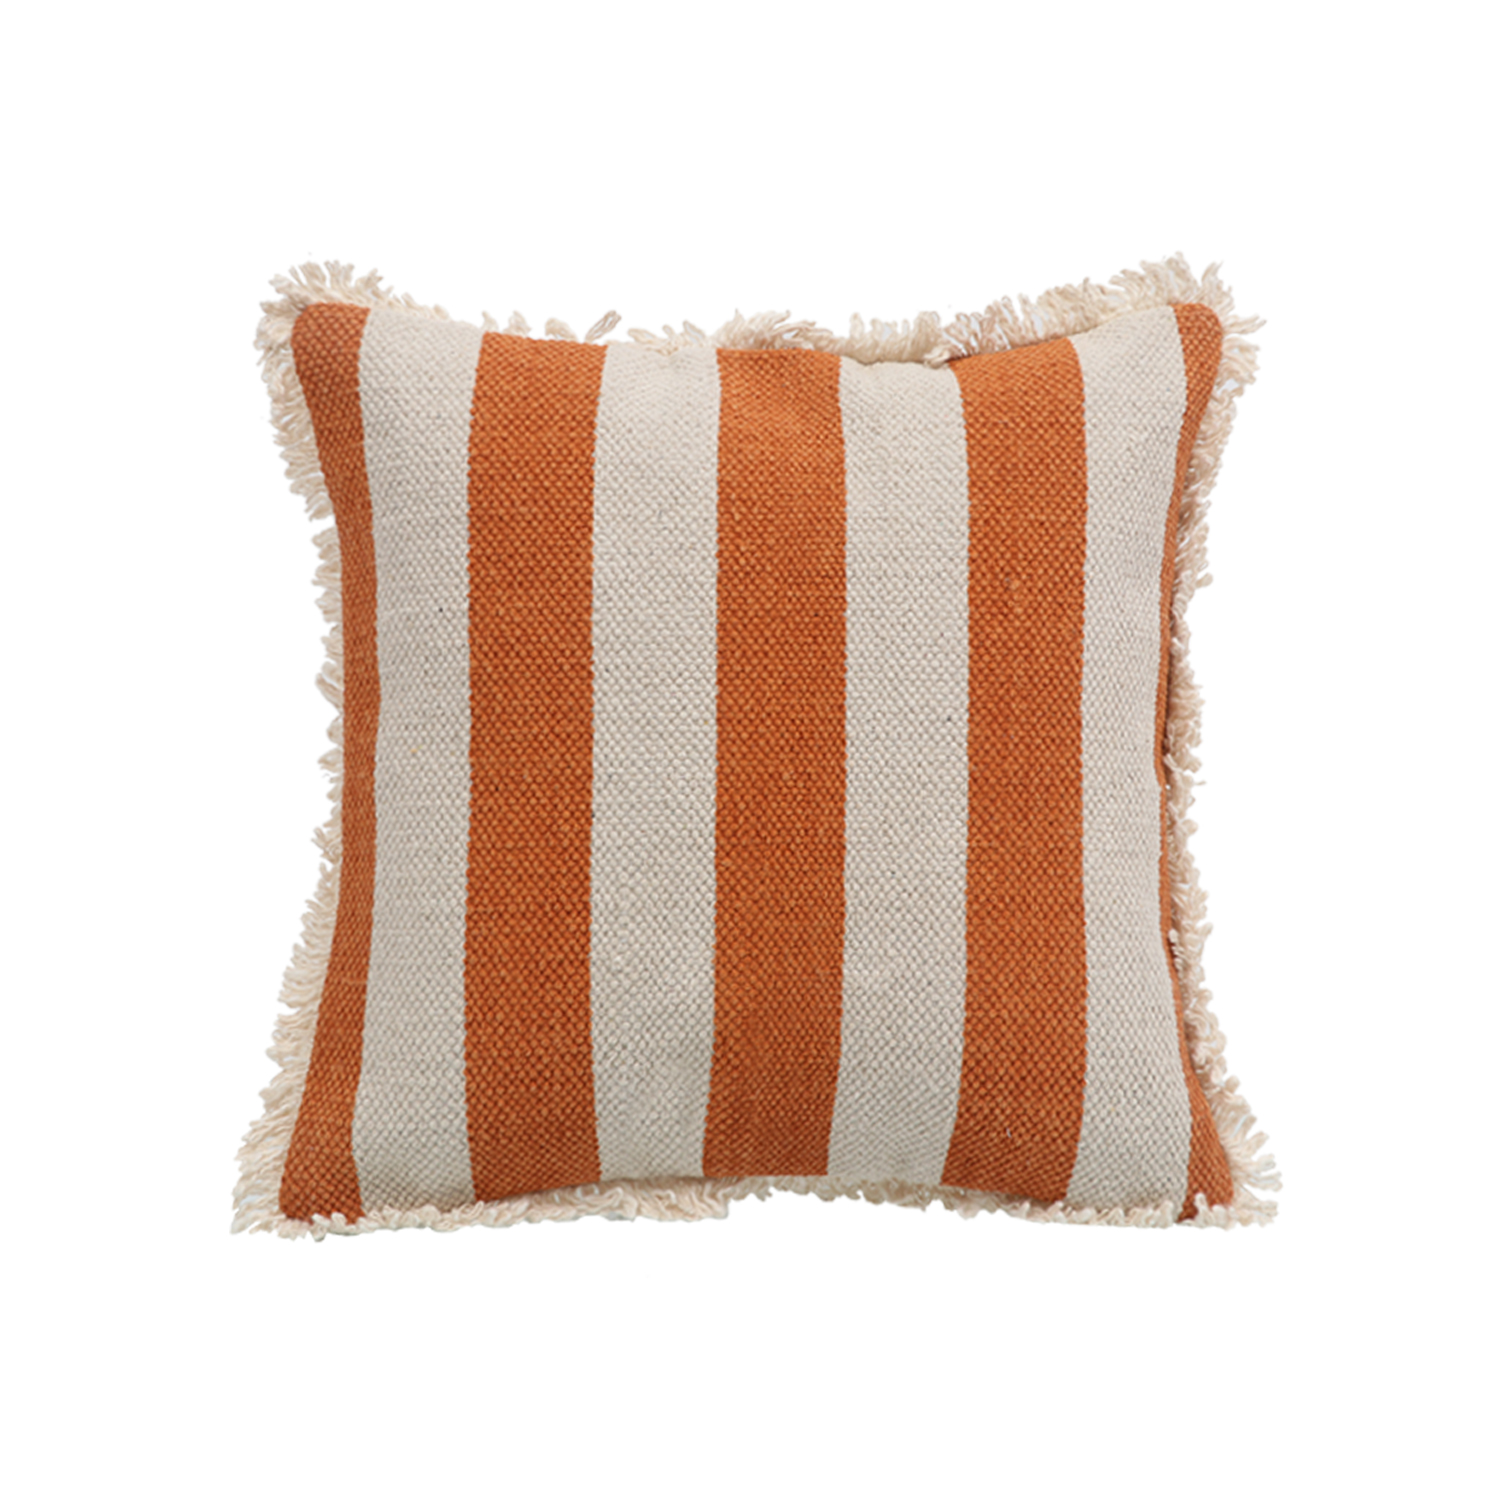 Printed Stripe Dark Orange   Cushions Covers with fringes 16X16 Inch